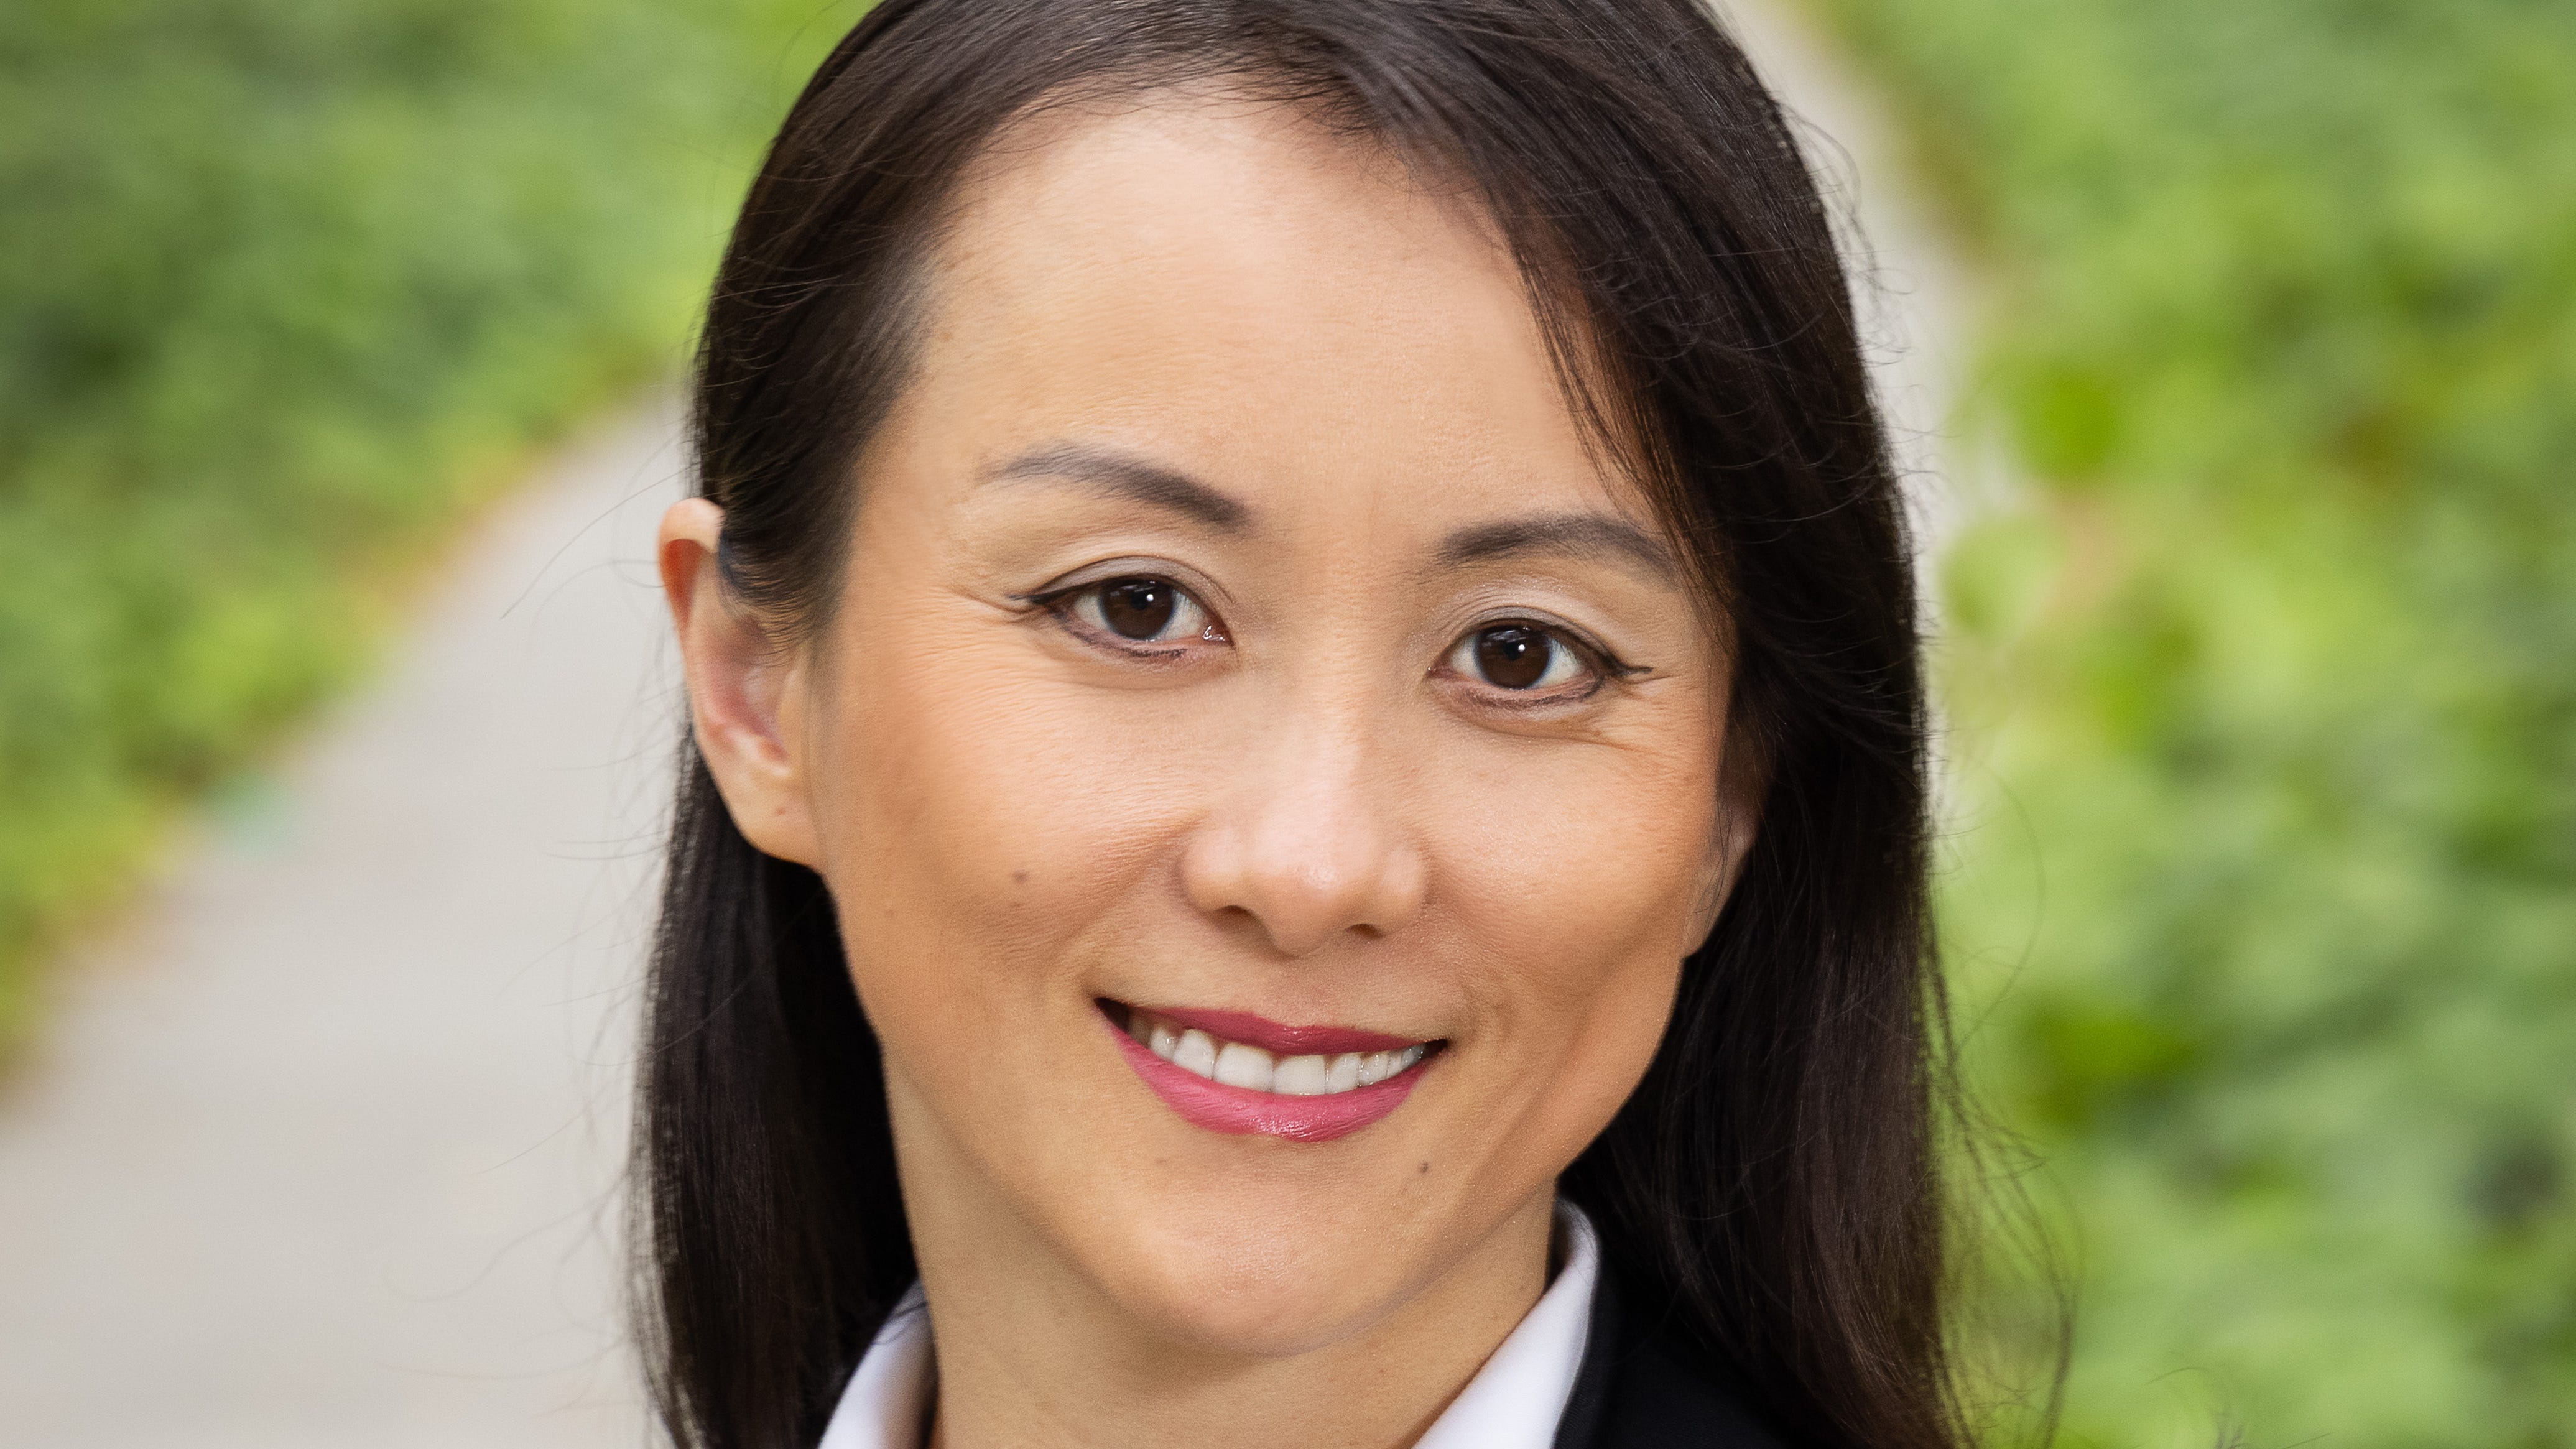 Xinying Valerian, managing partner of Valerian Law in Albany, California